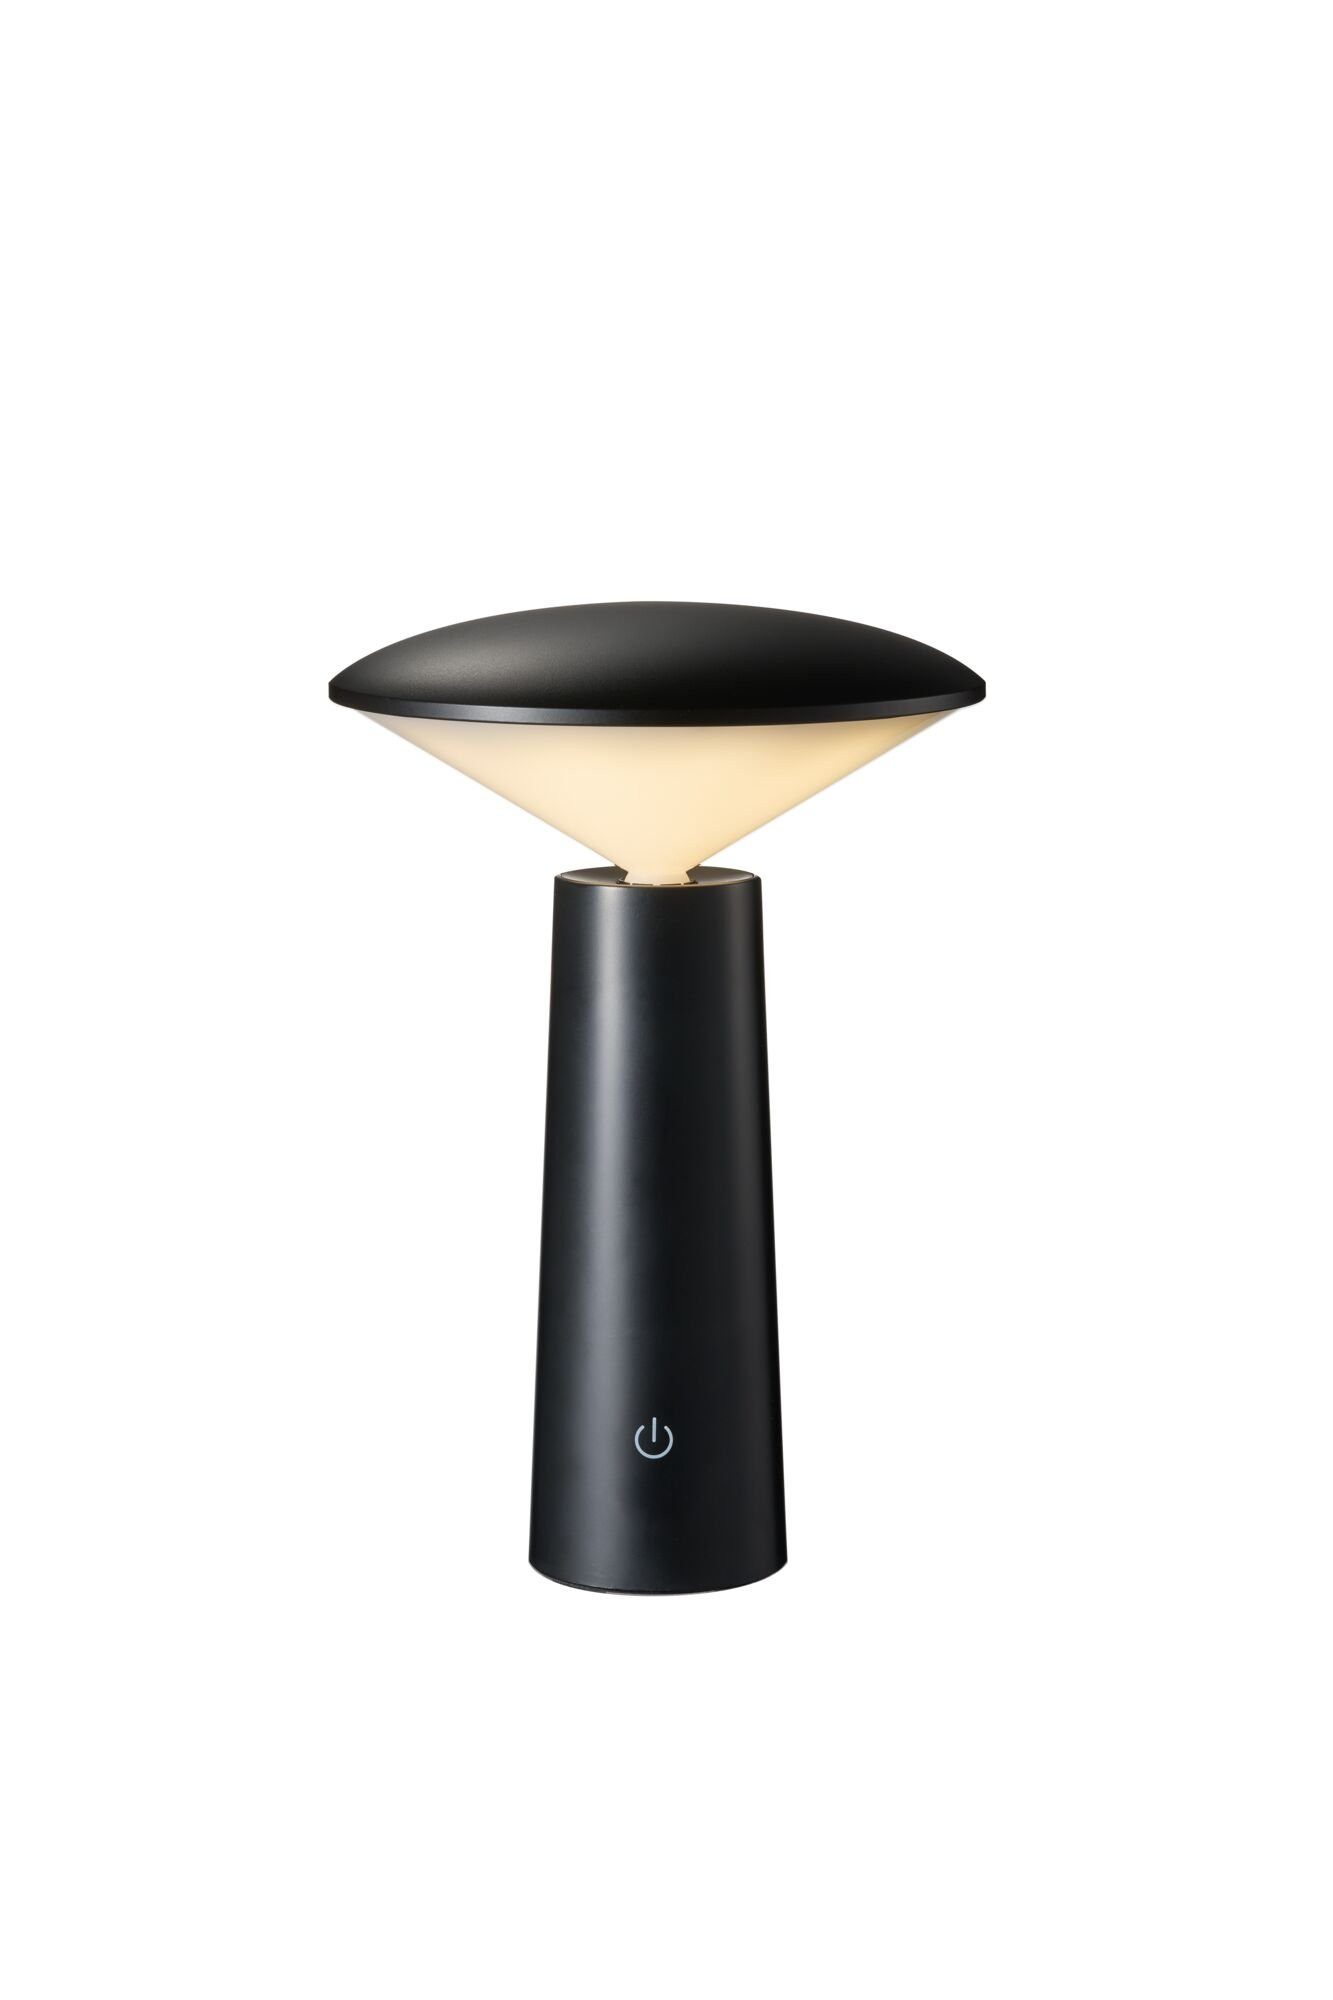 Pauleen LED Tischleuchte Adorable Shine Mobile schwarz 3W 5V, ohne Leuchtmittel, Tageslichtweiß, WhiteSwitch, dimmbar, USB-charger